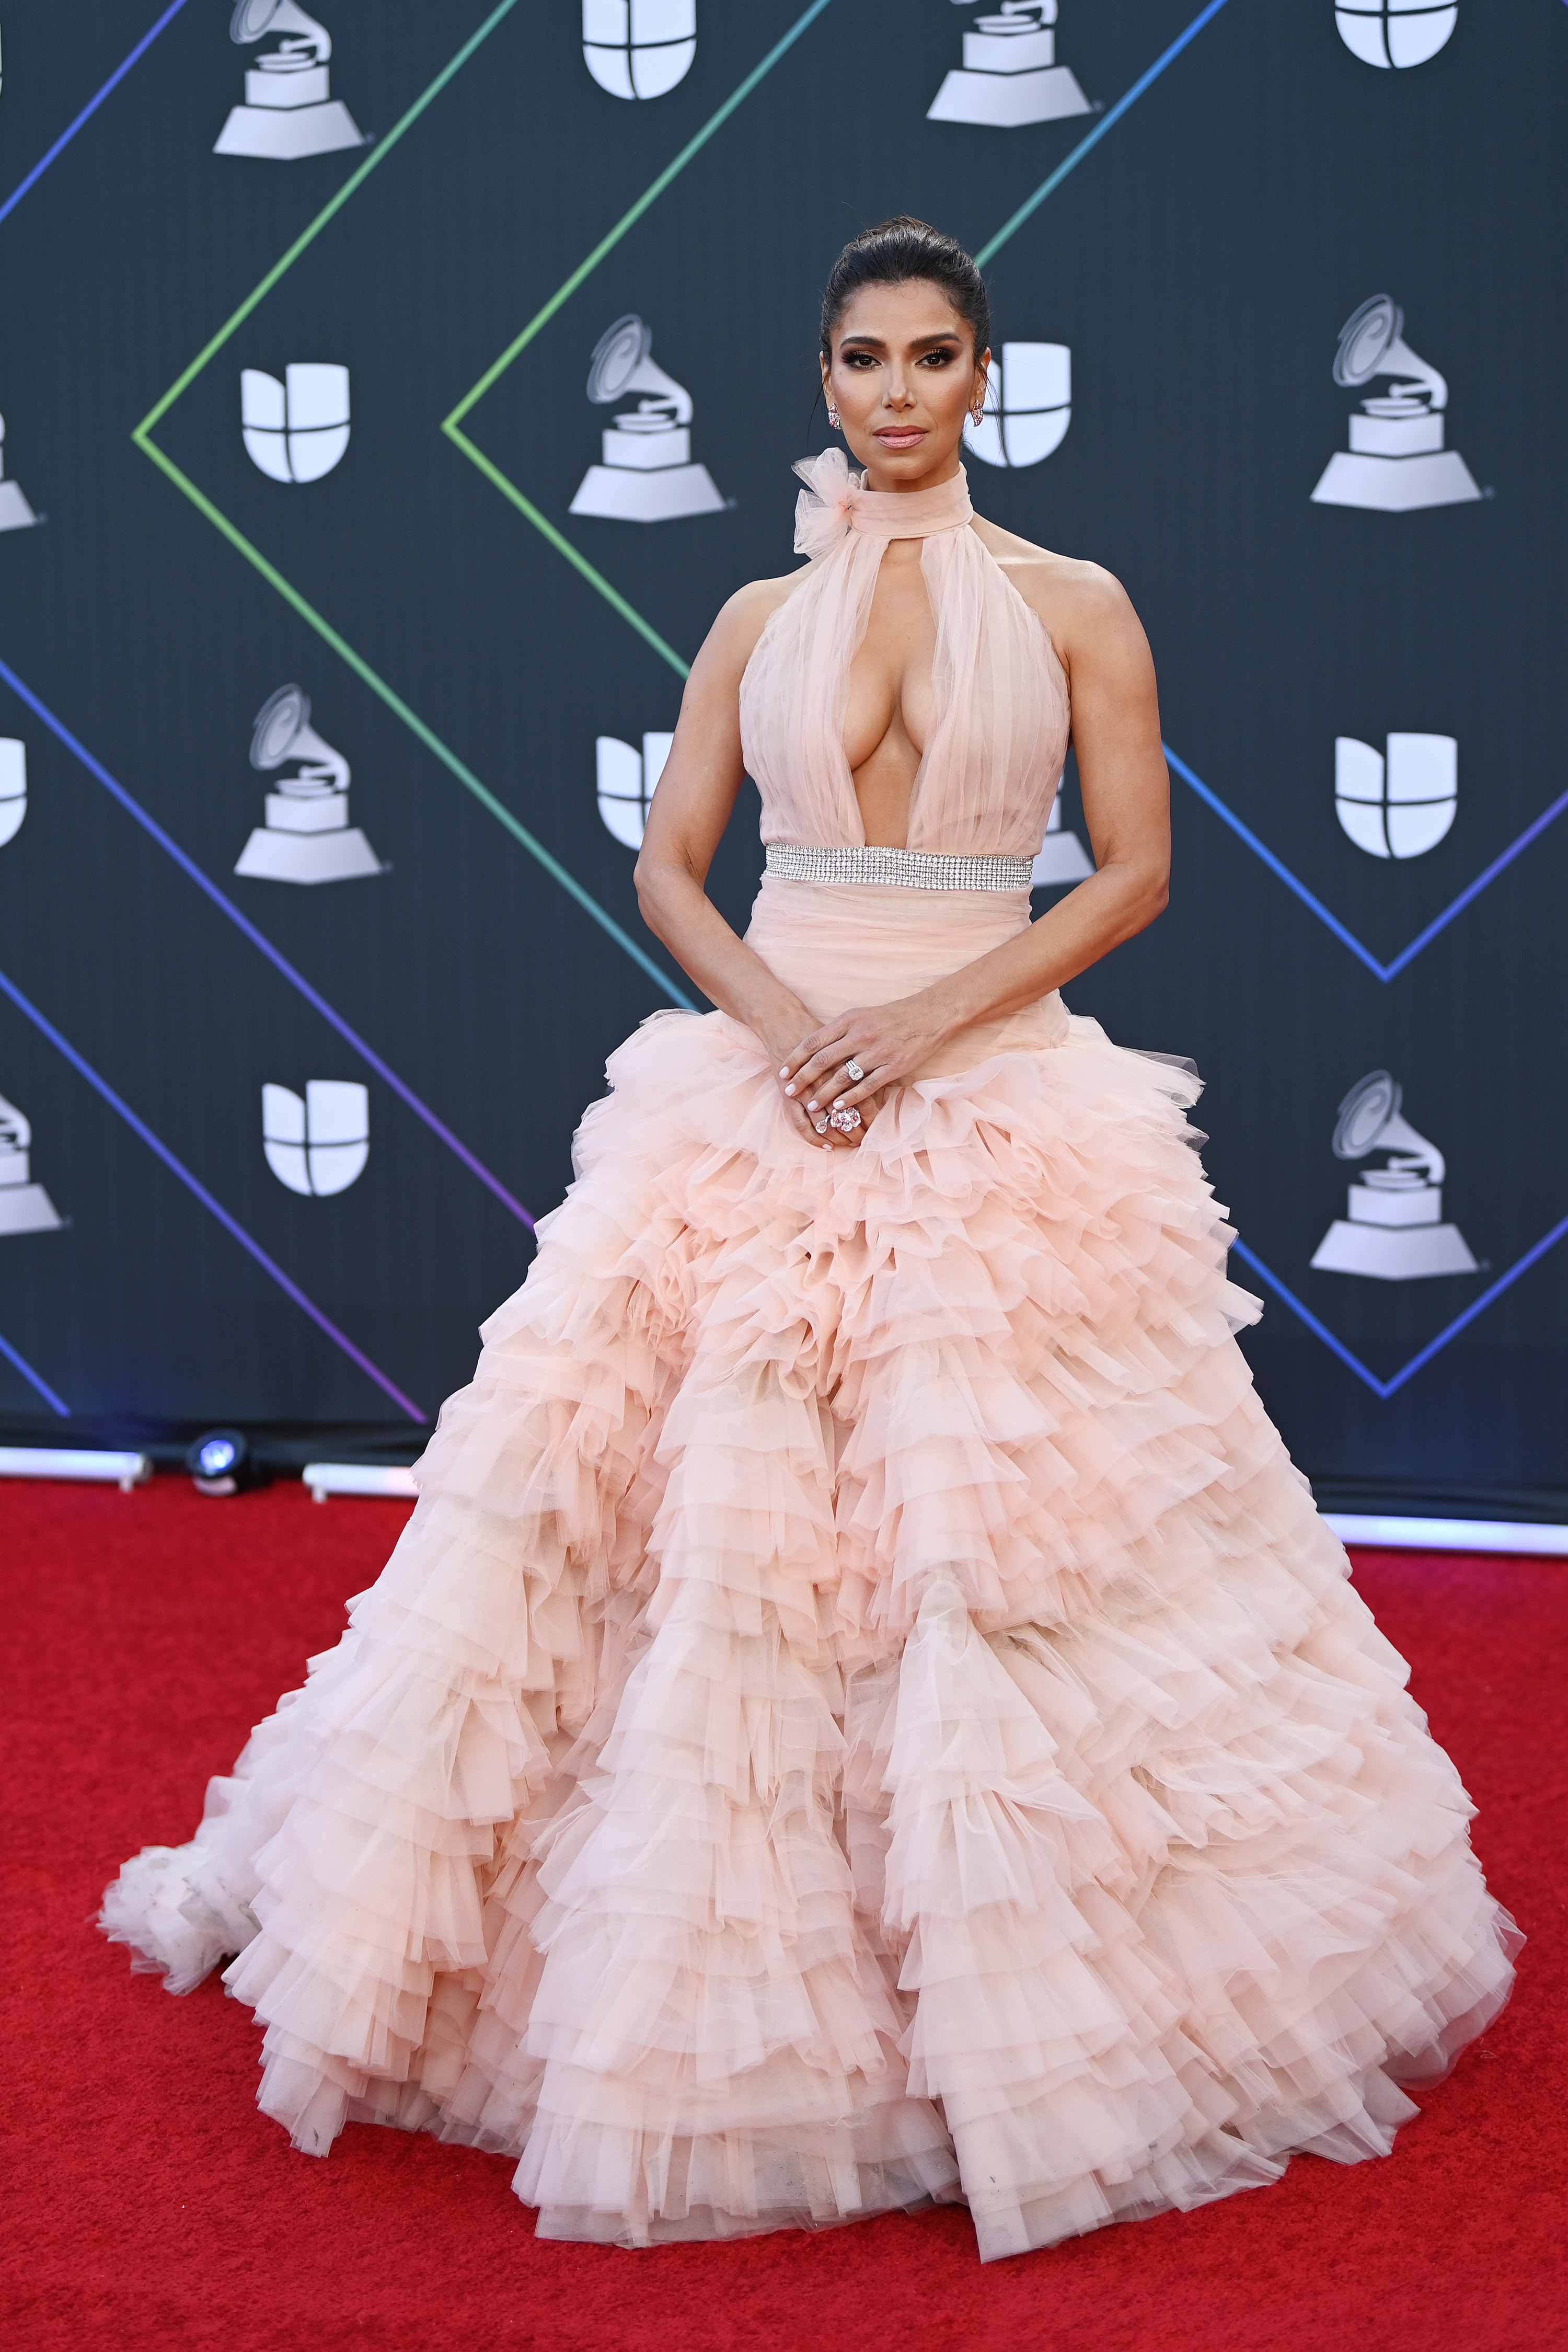 Roselyn Sánchez poses at the Latin Grammy Awards on November 18, 2021